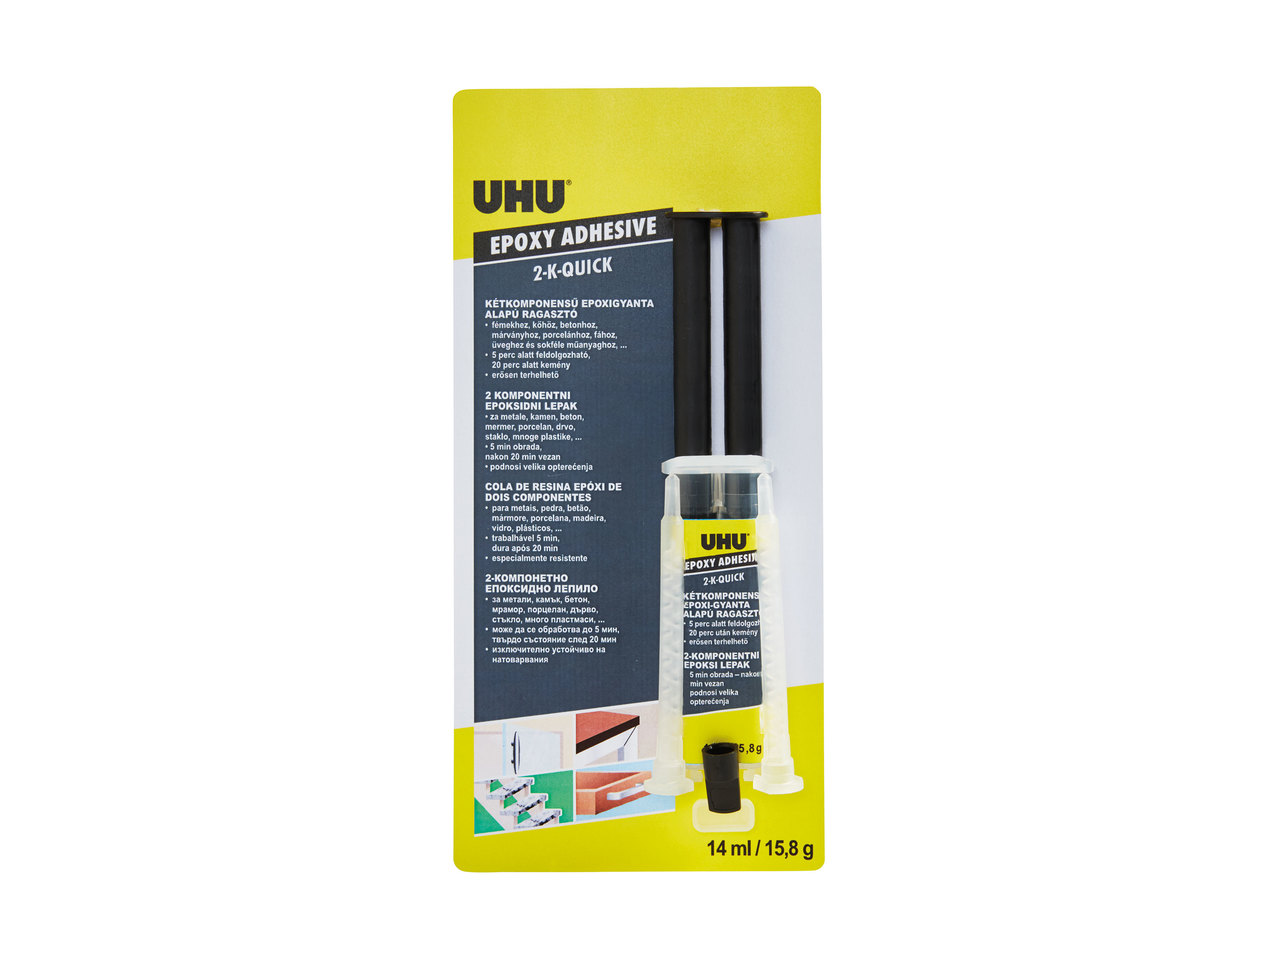 UHU Epoxy Adhesive, Minis or Quick Epoxy Adhesive1